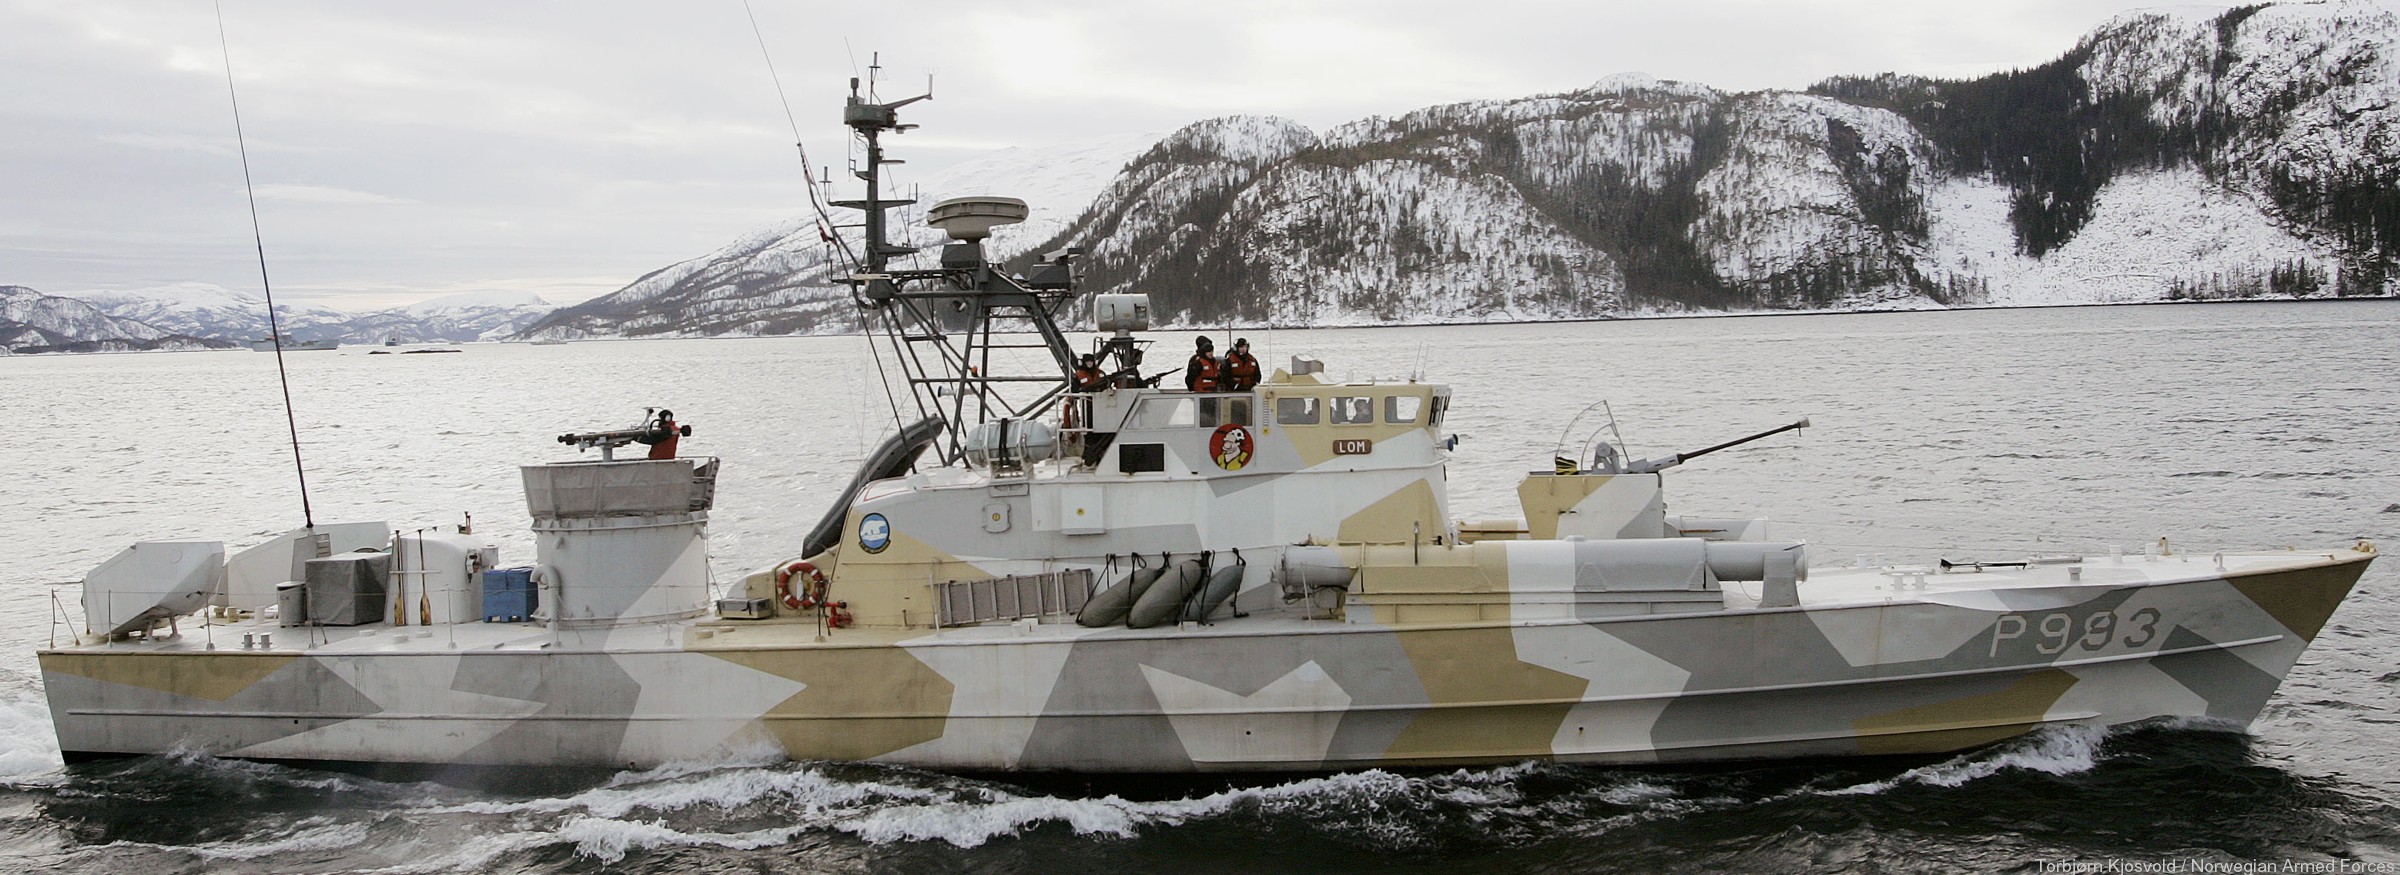 p-993 knm lom hauk class fast attack missile torpedo craft boat norwegian navy sjøforsvaret 03